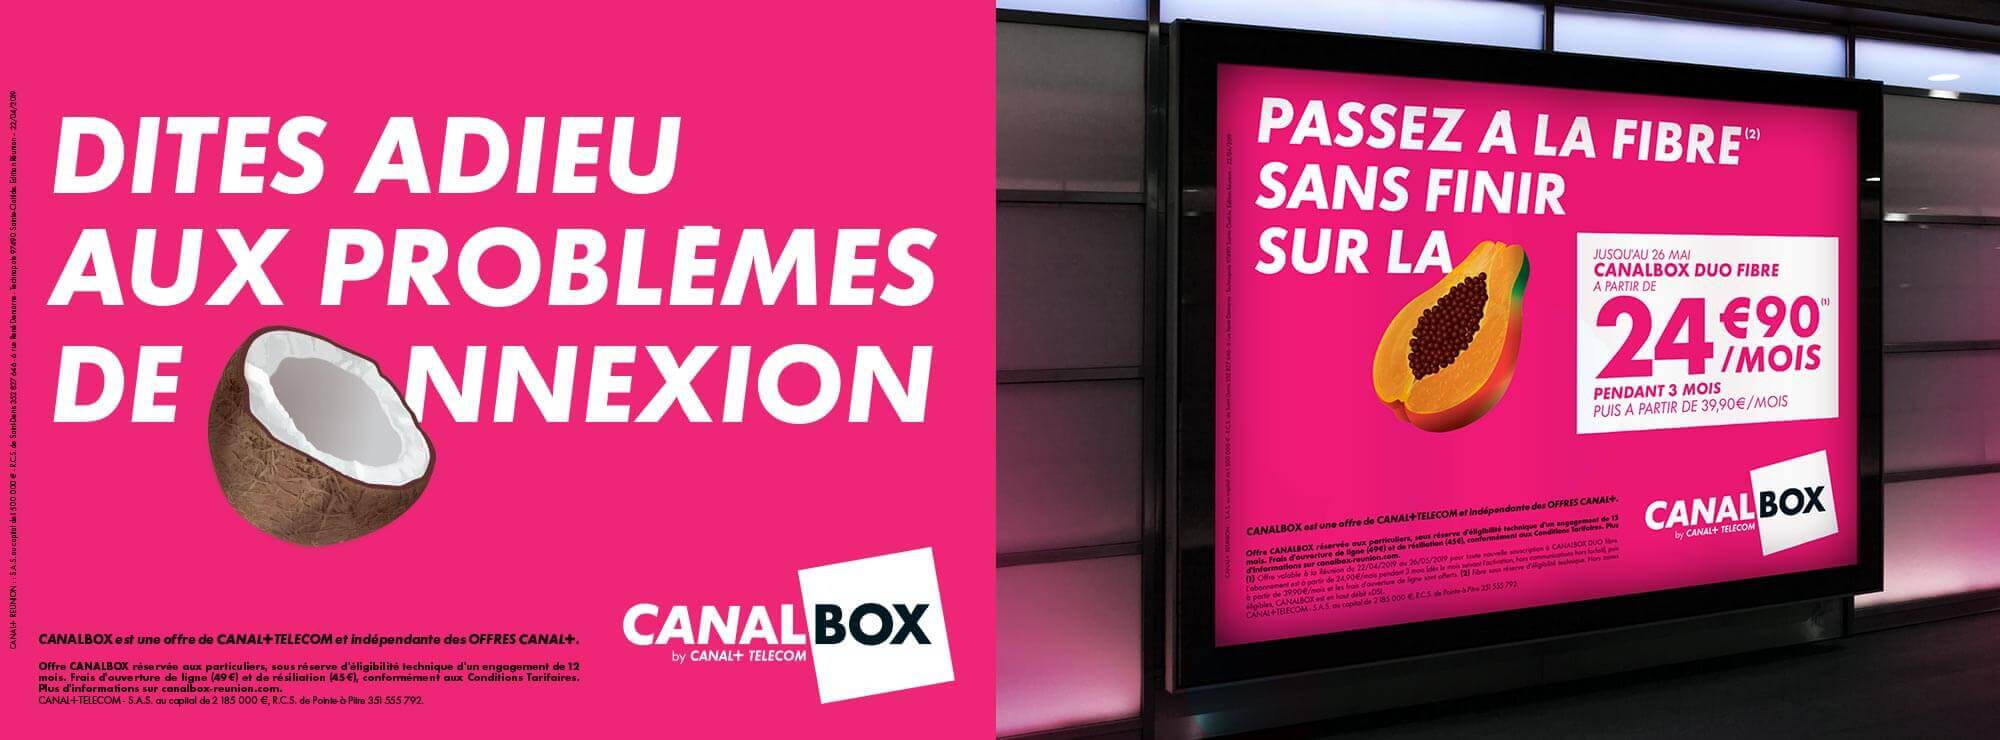 04 canal  emojis canalbox affiche 4x3 rose connexion fibre publicite advertising illustration fruit.jpg